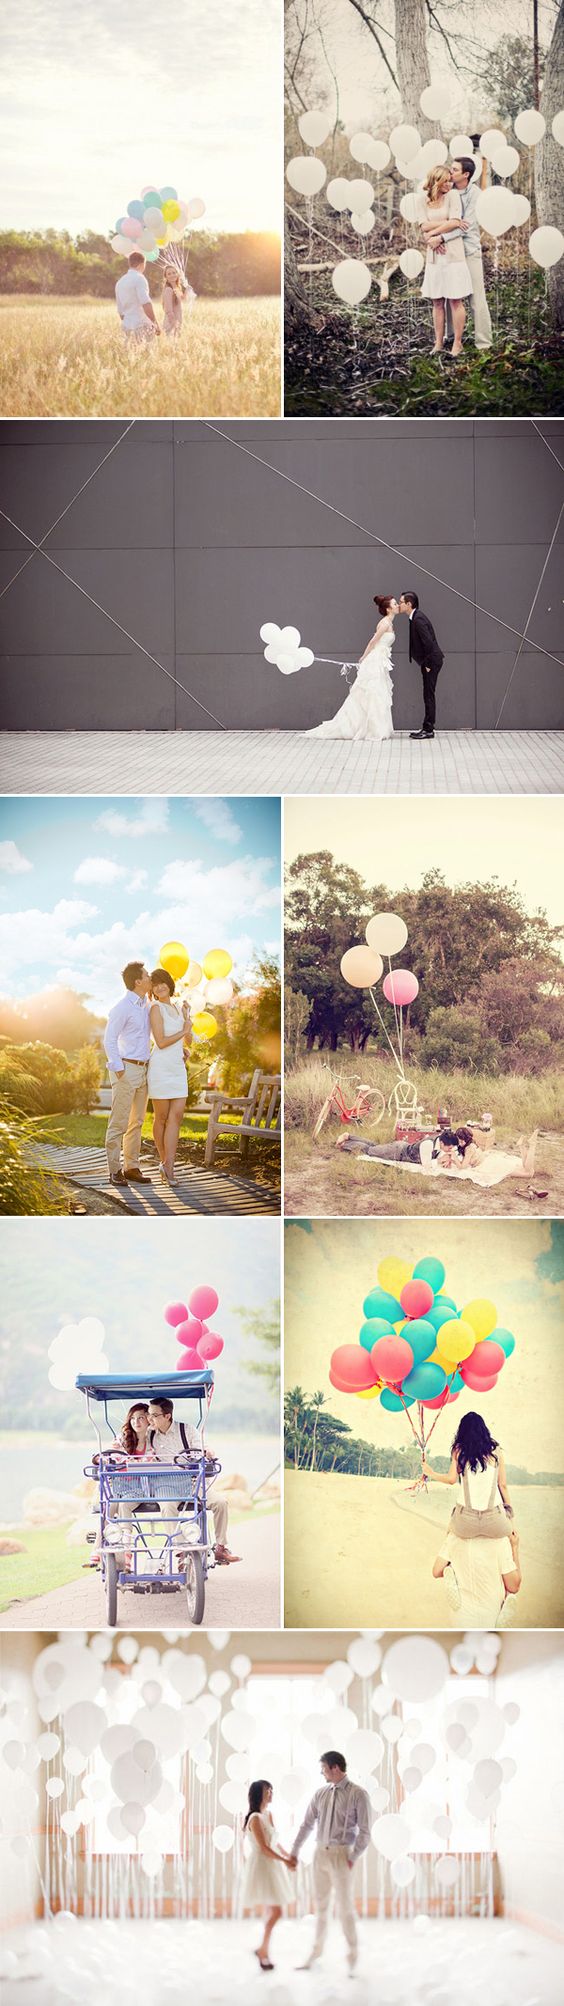 Balloons engagement photo ideas